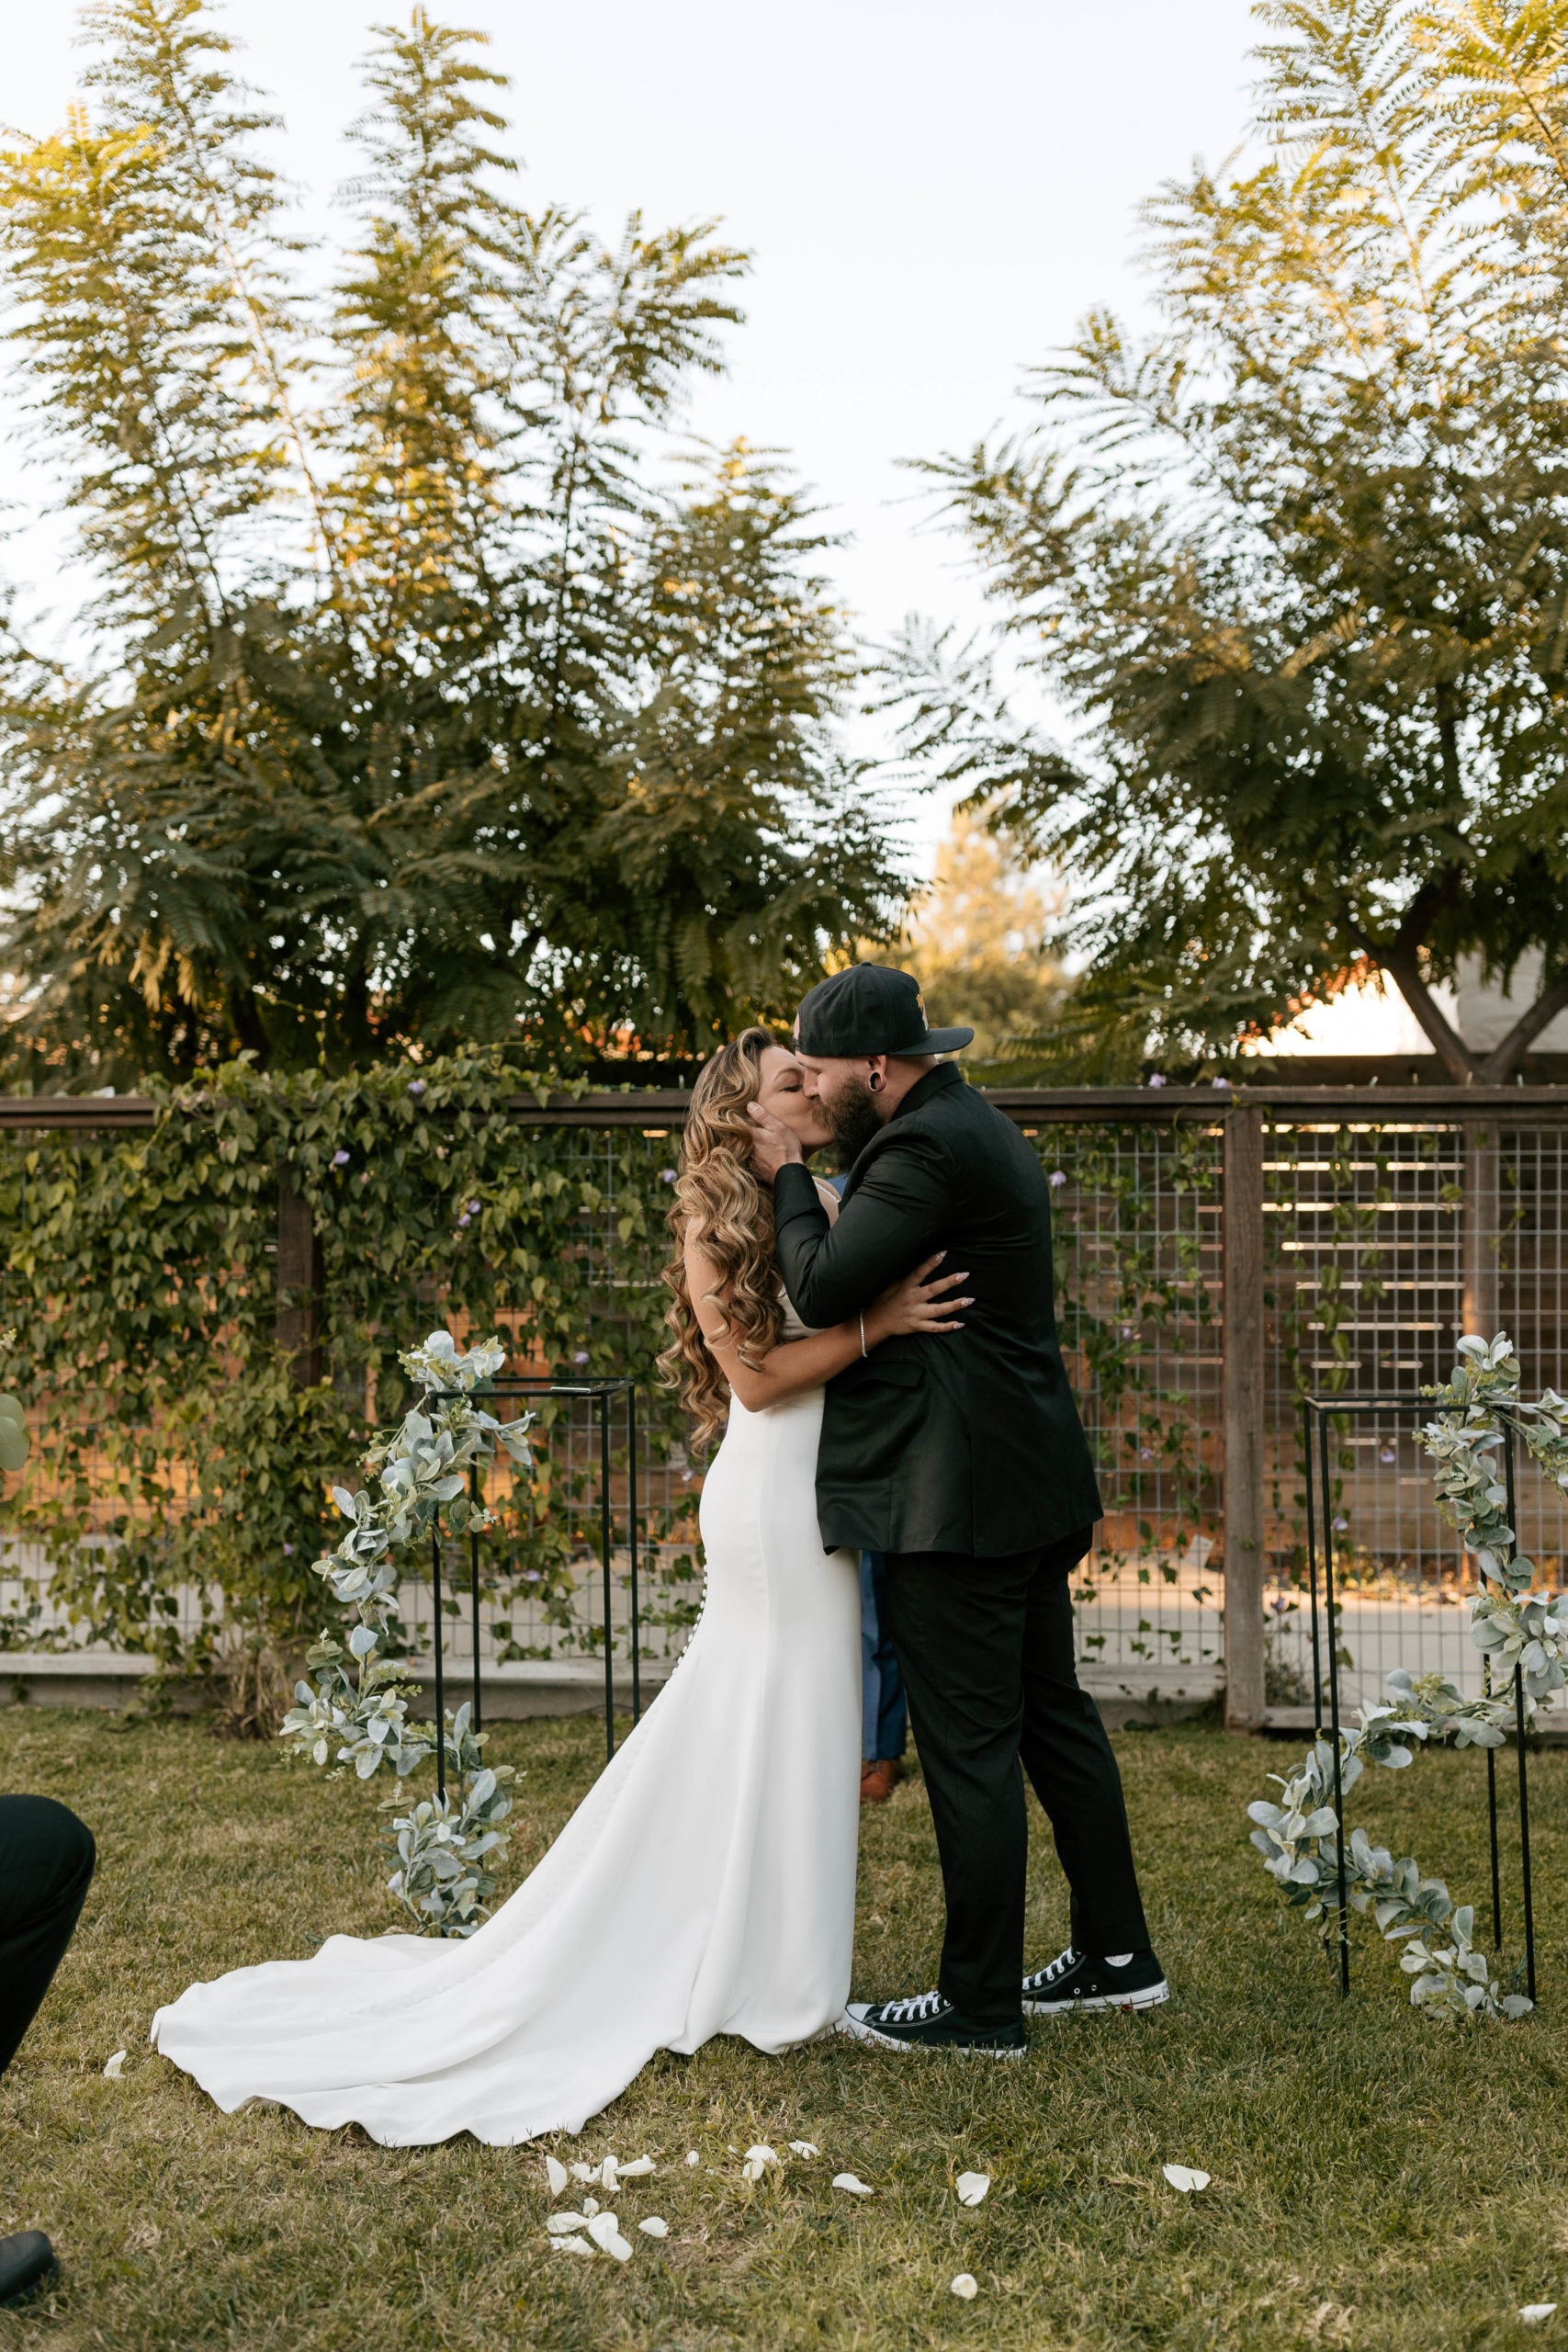 Jordan and Gaige backyard wedding in Burbank